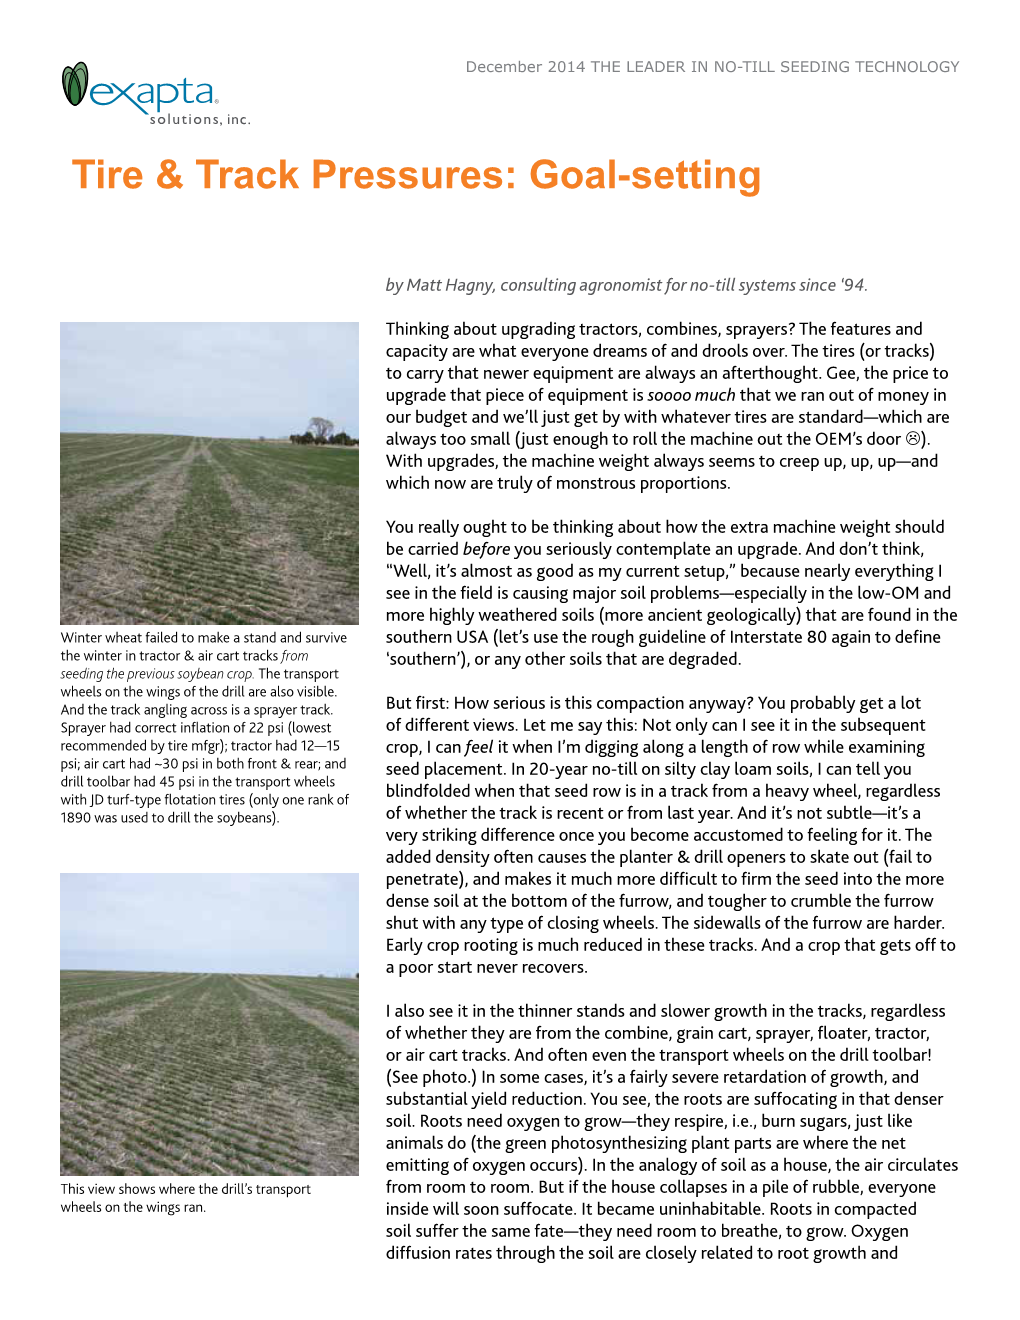 Tire & Track Pressures